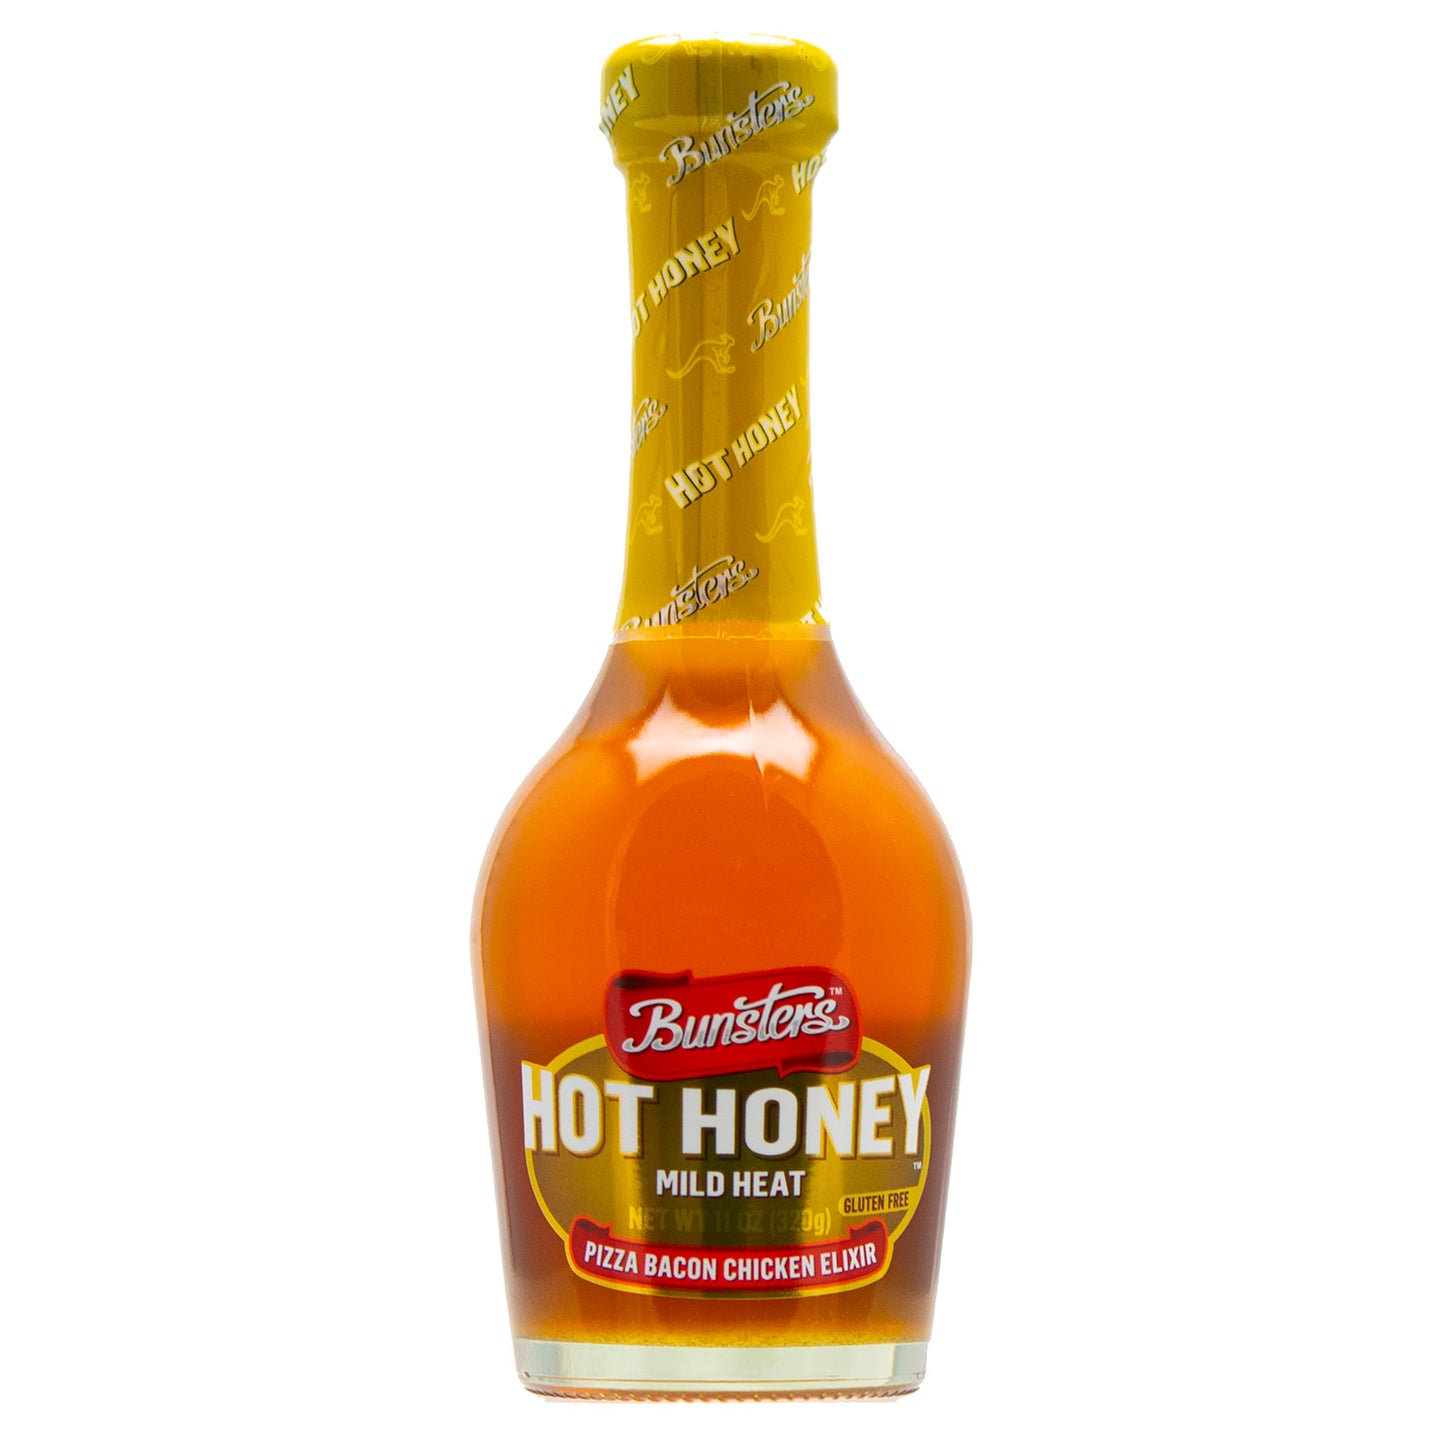 Bunsters Hot Honey